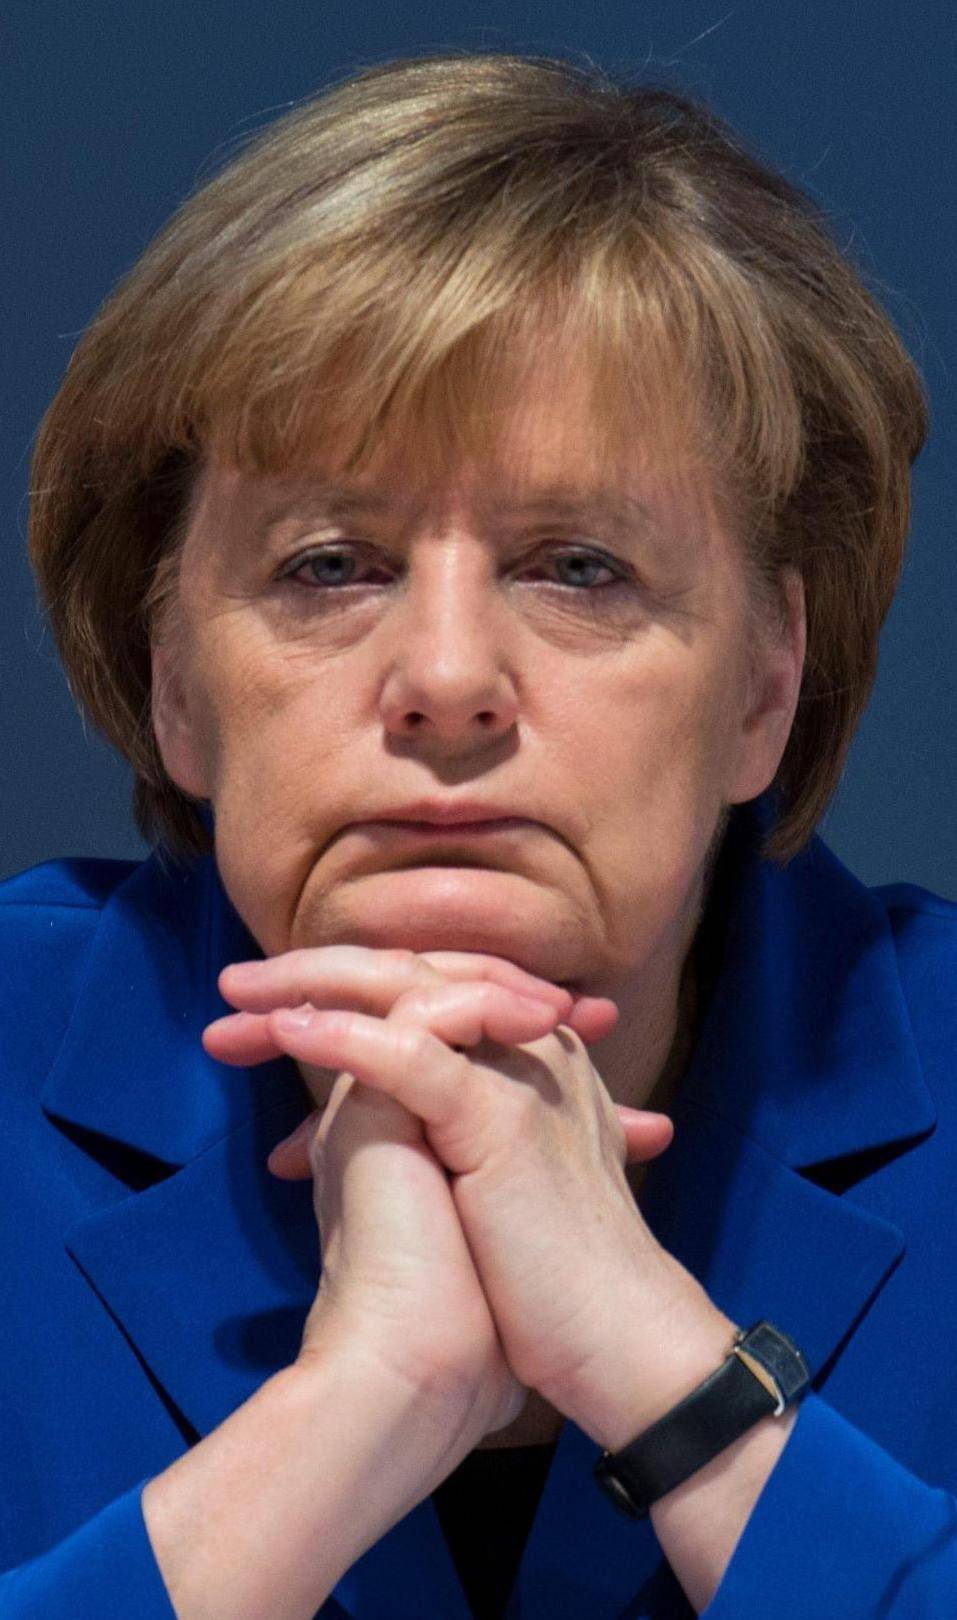 La Merkel: "Prelievo forzoso nei Paesi a rischio default"